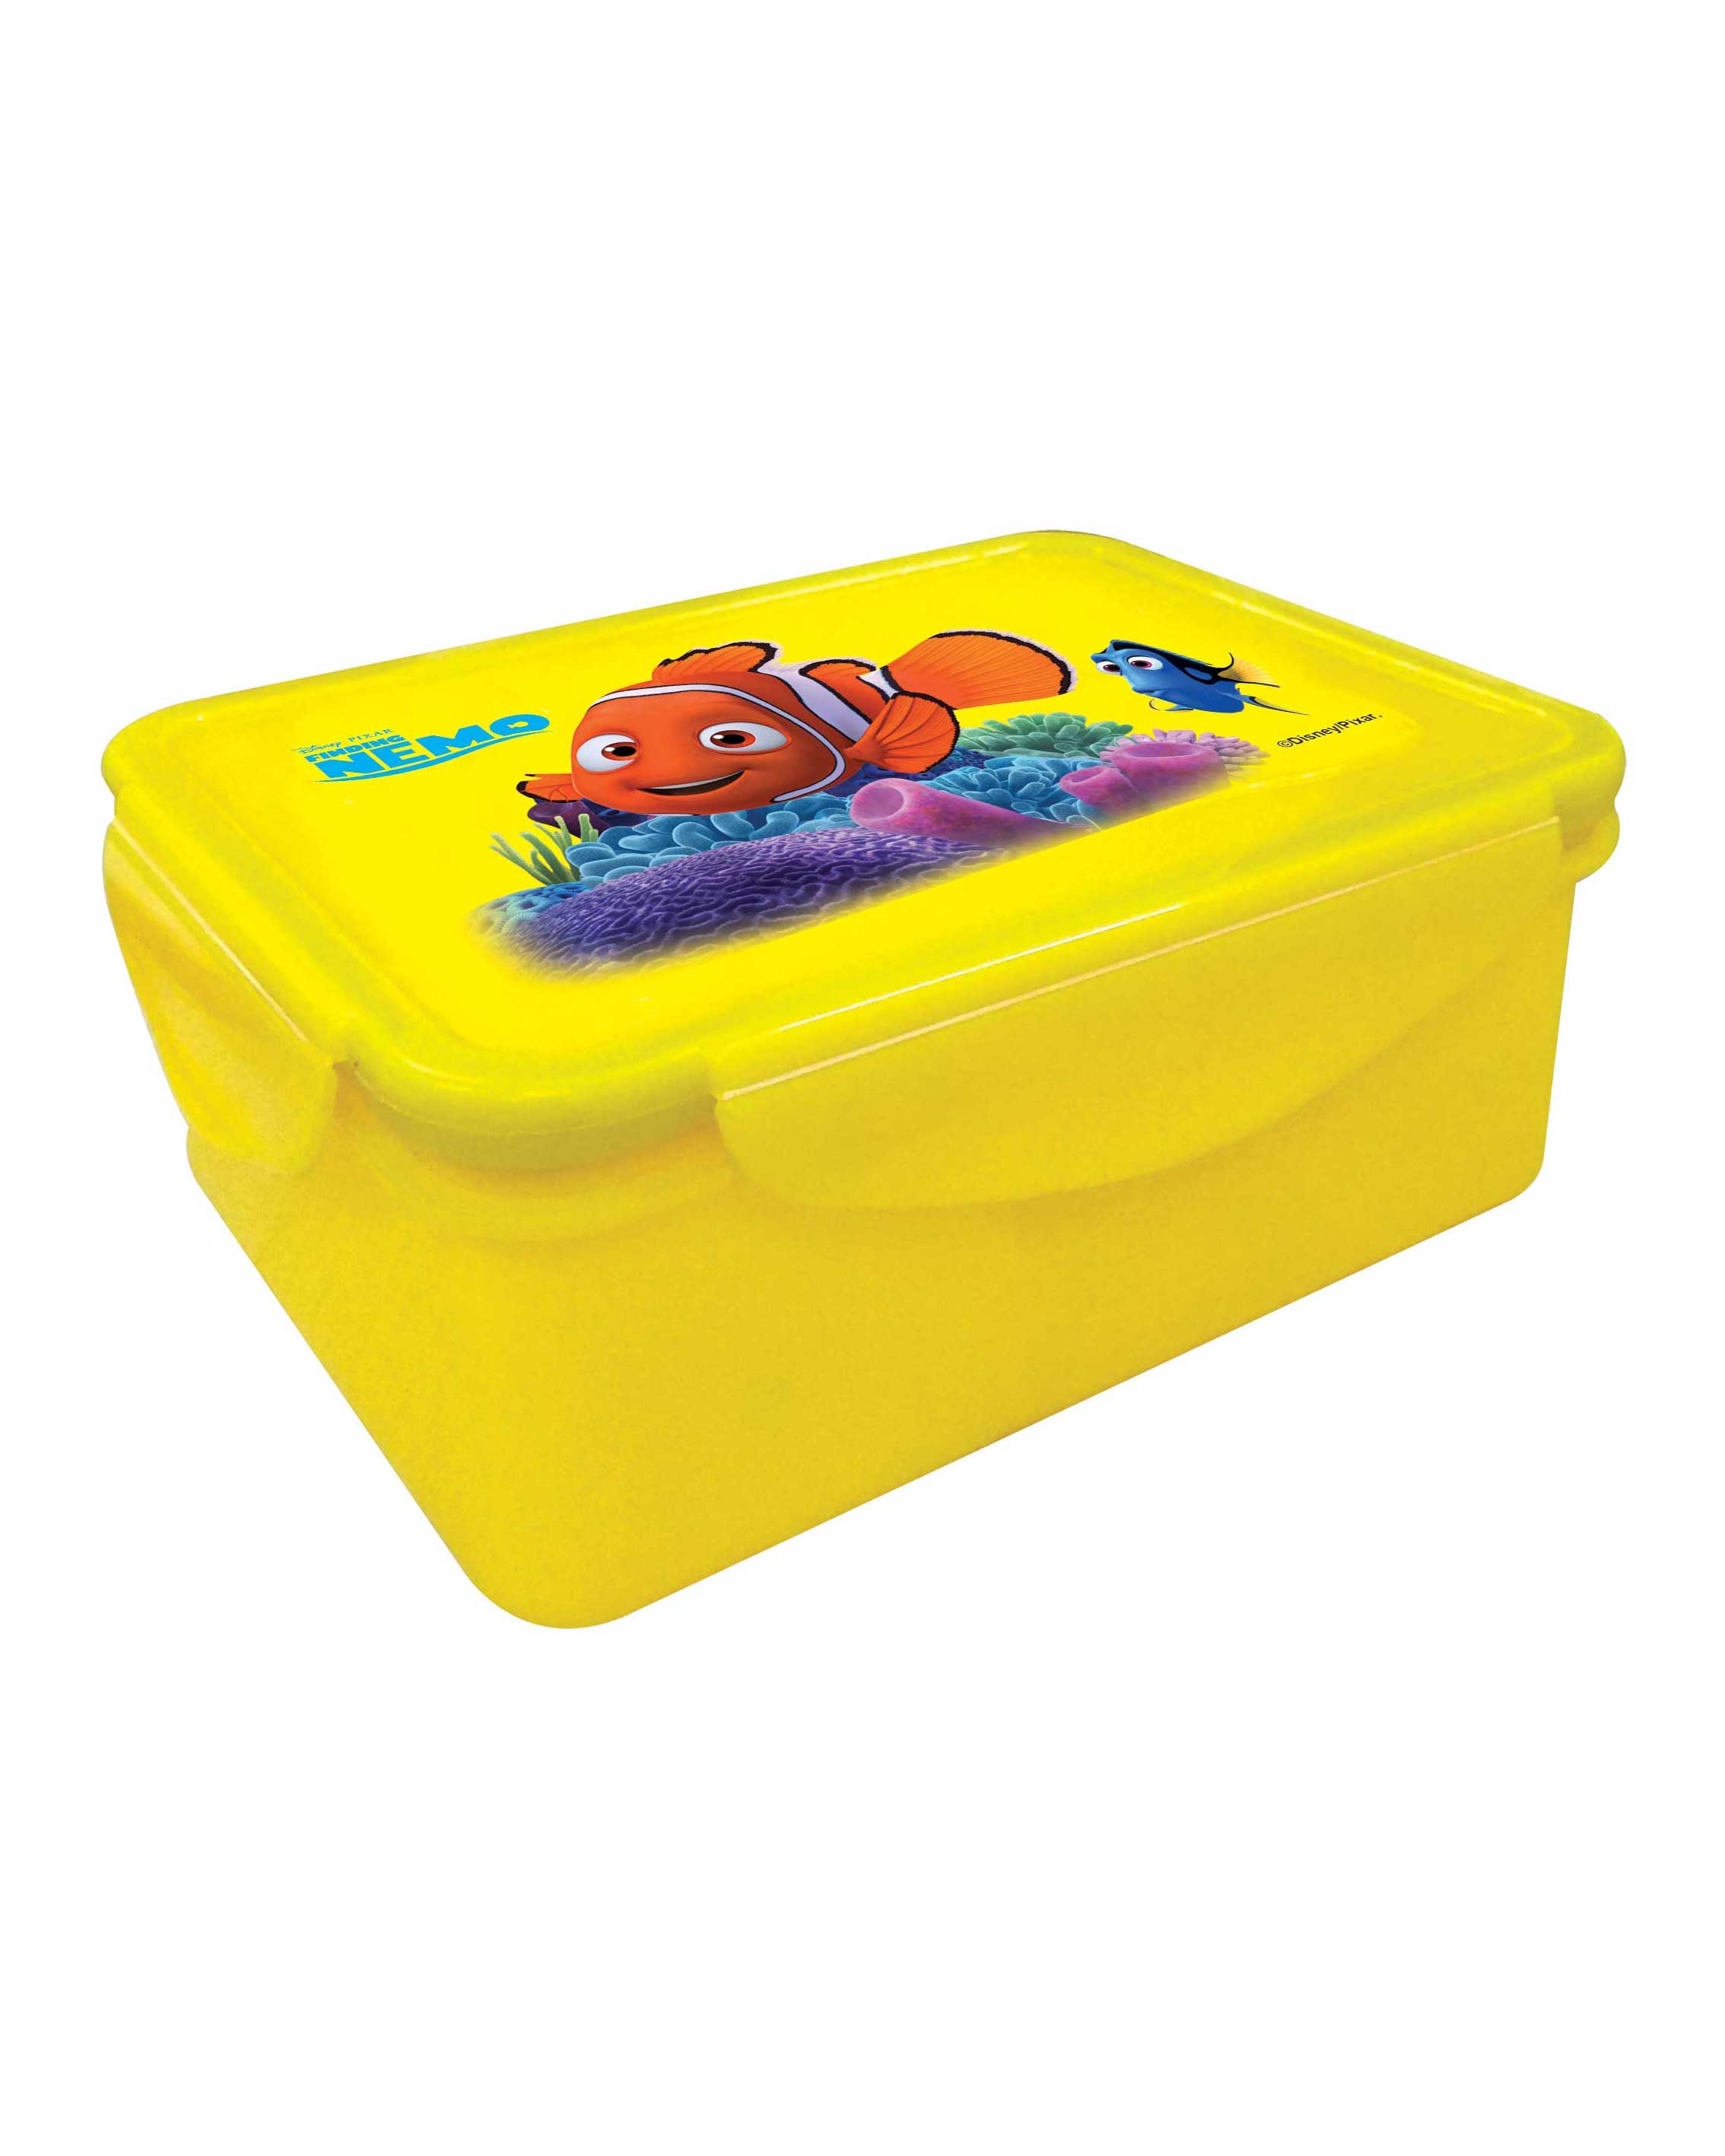 Finding Nemo Lunch Box